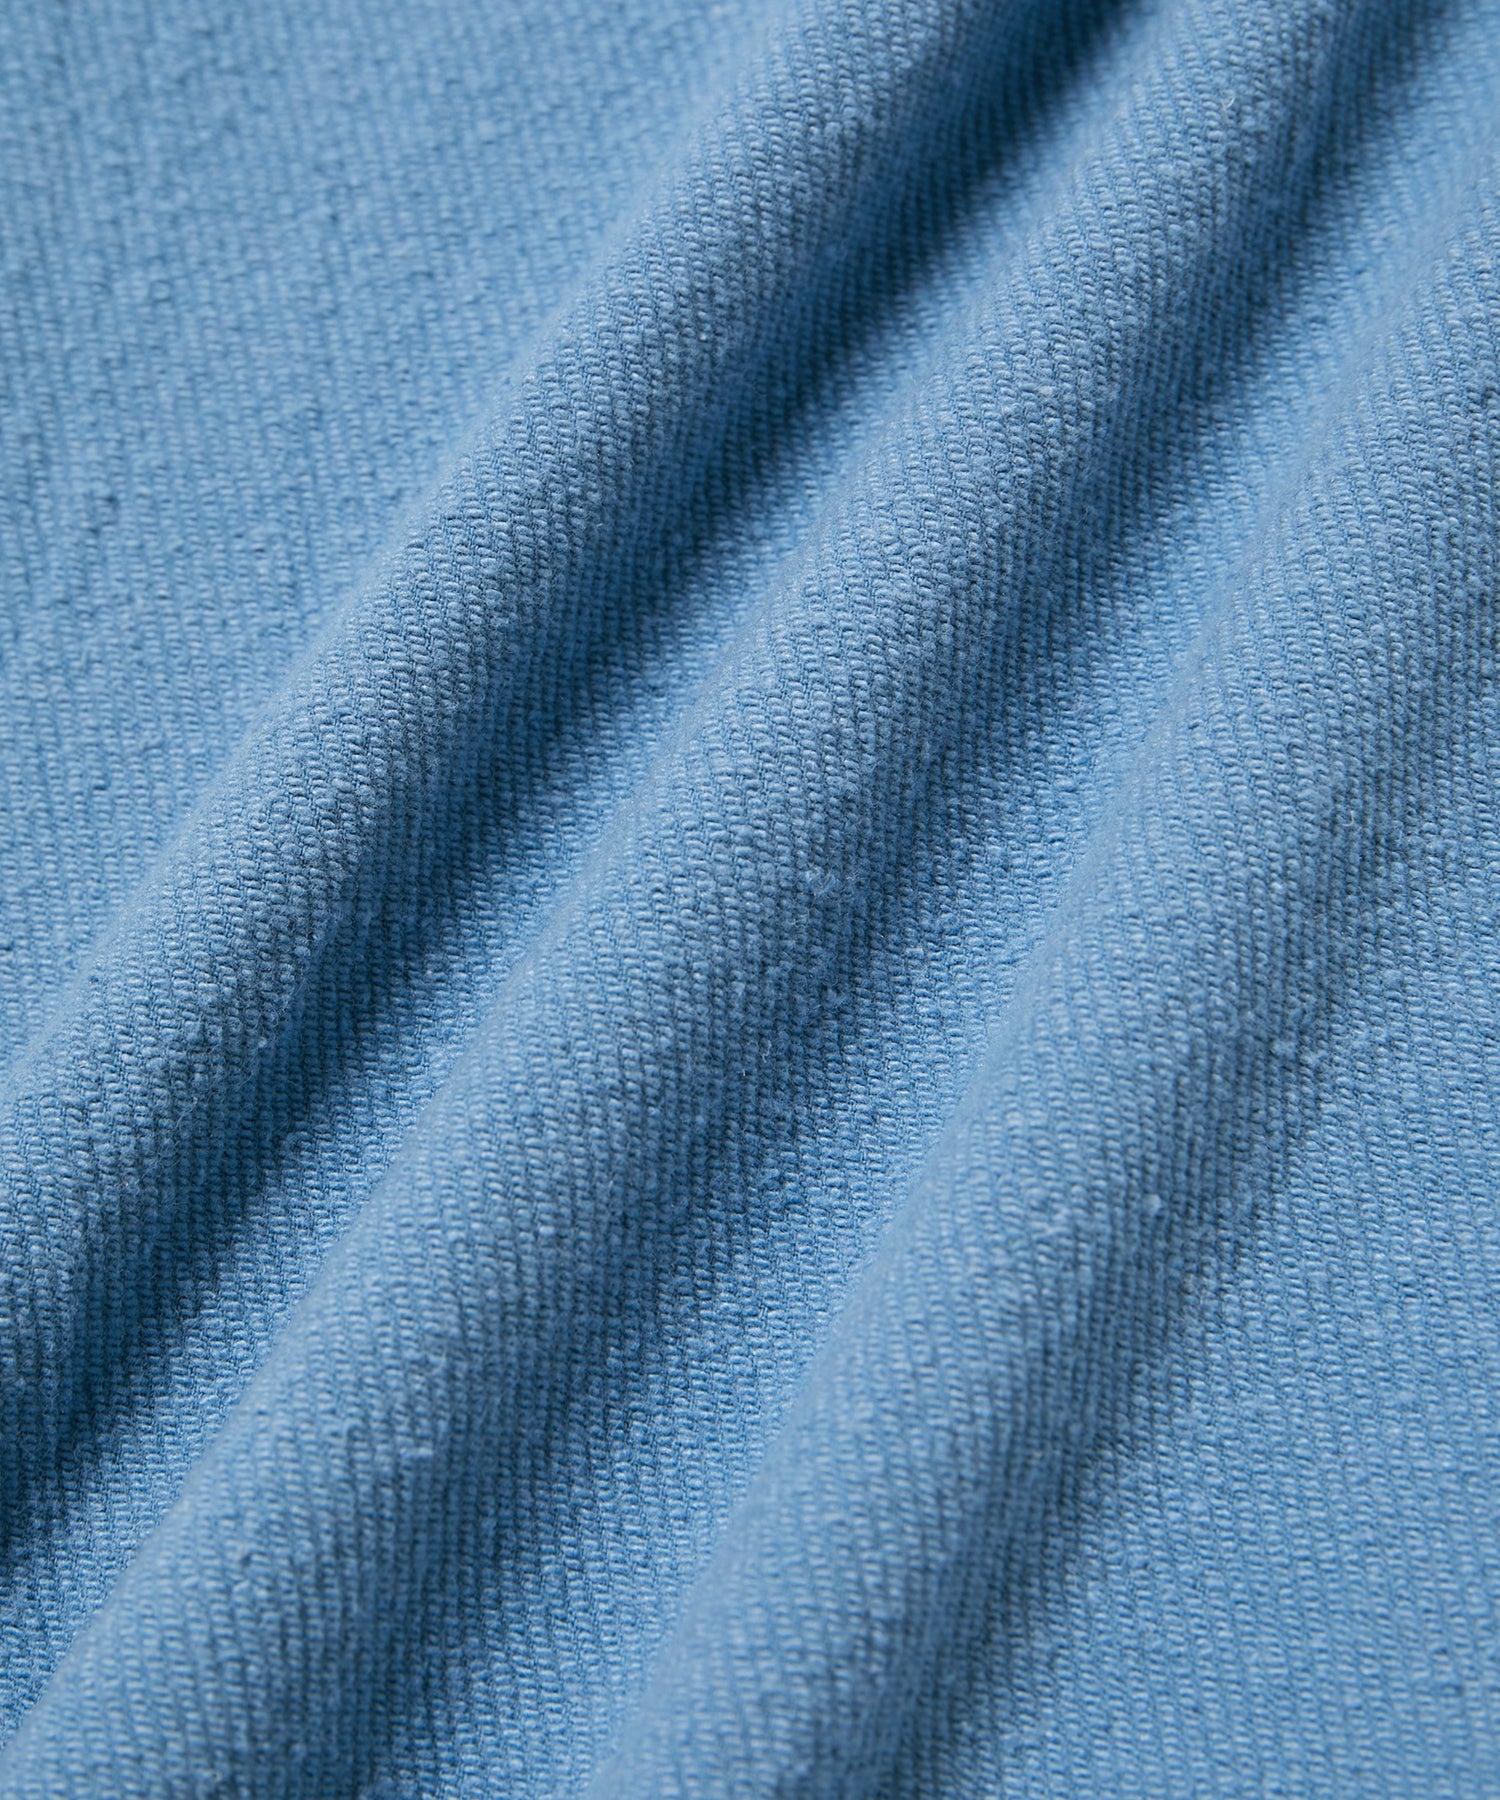 Broome Boucle Knit Shirt - Coronet Blue